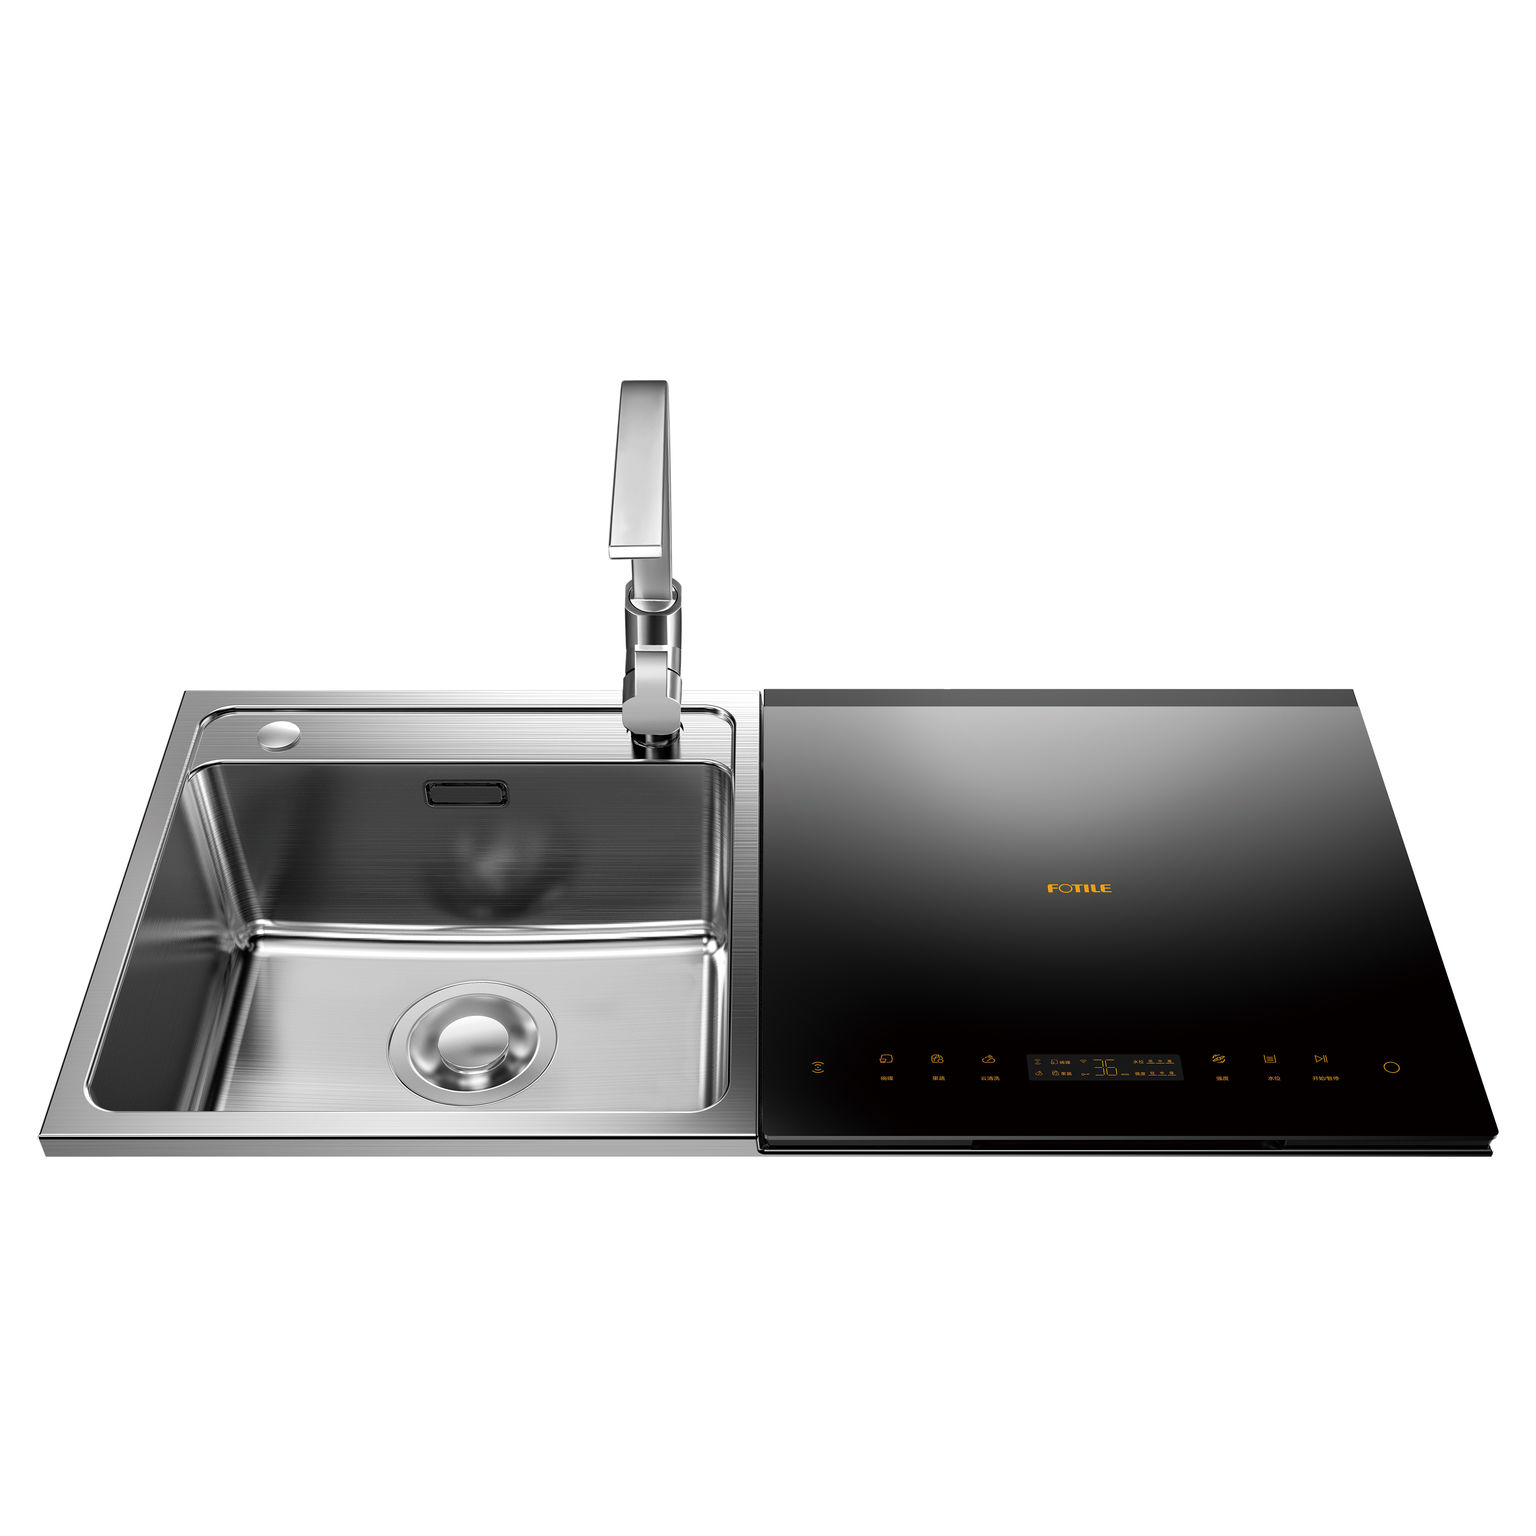 Fotile sink dishwasher JBSD2T-Q8